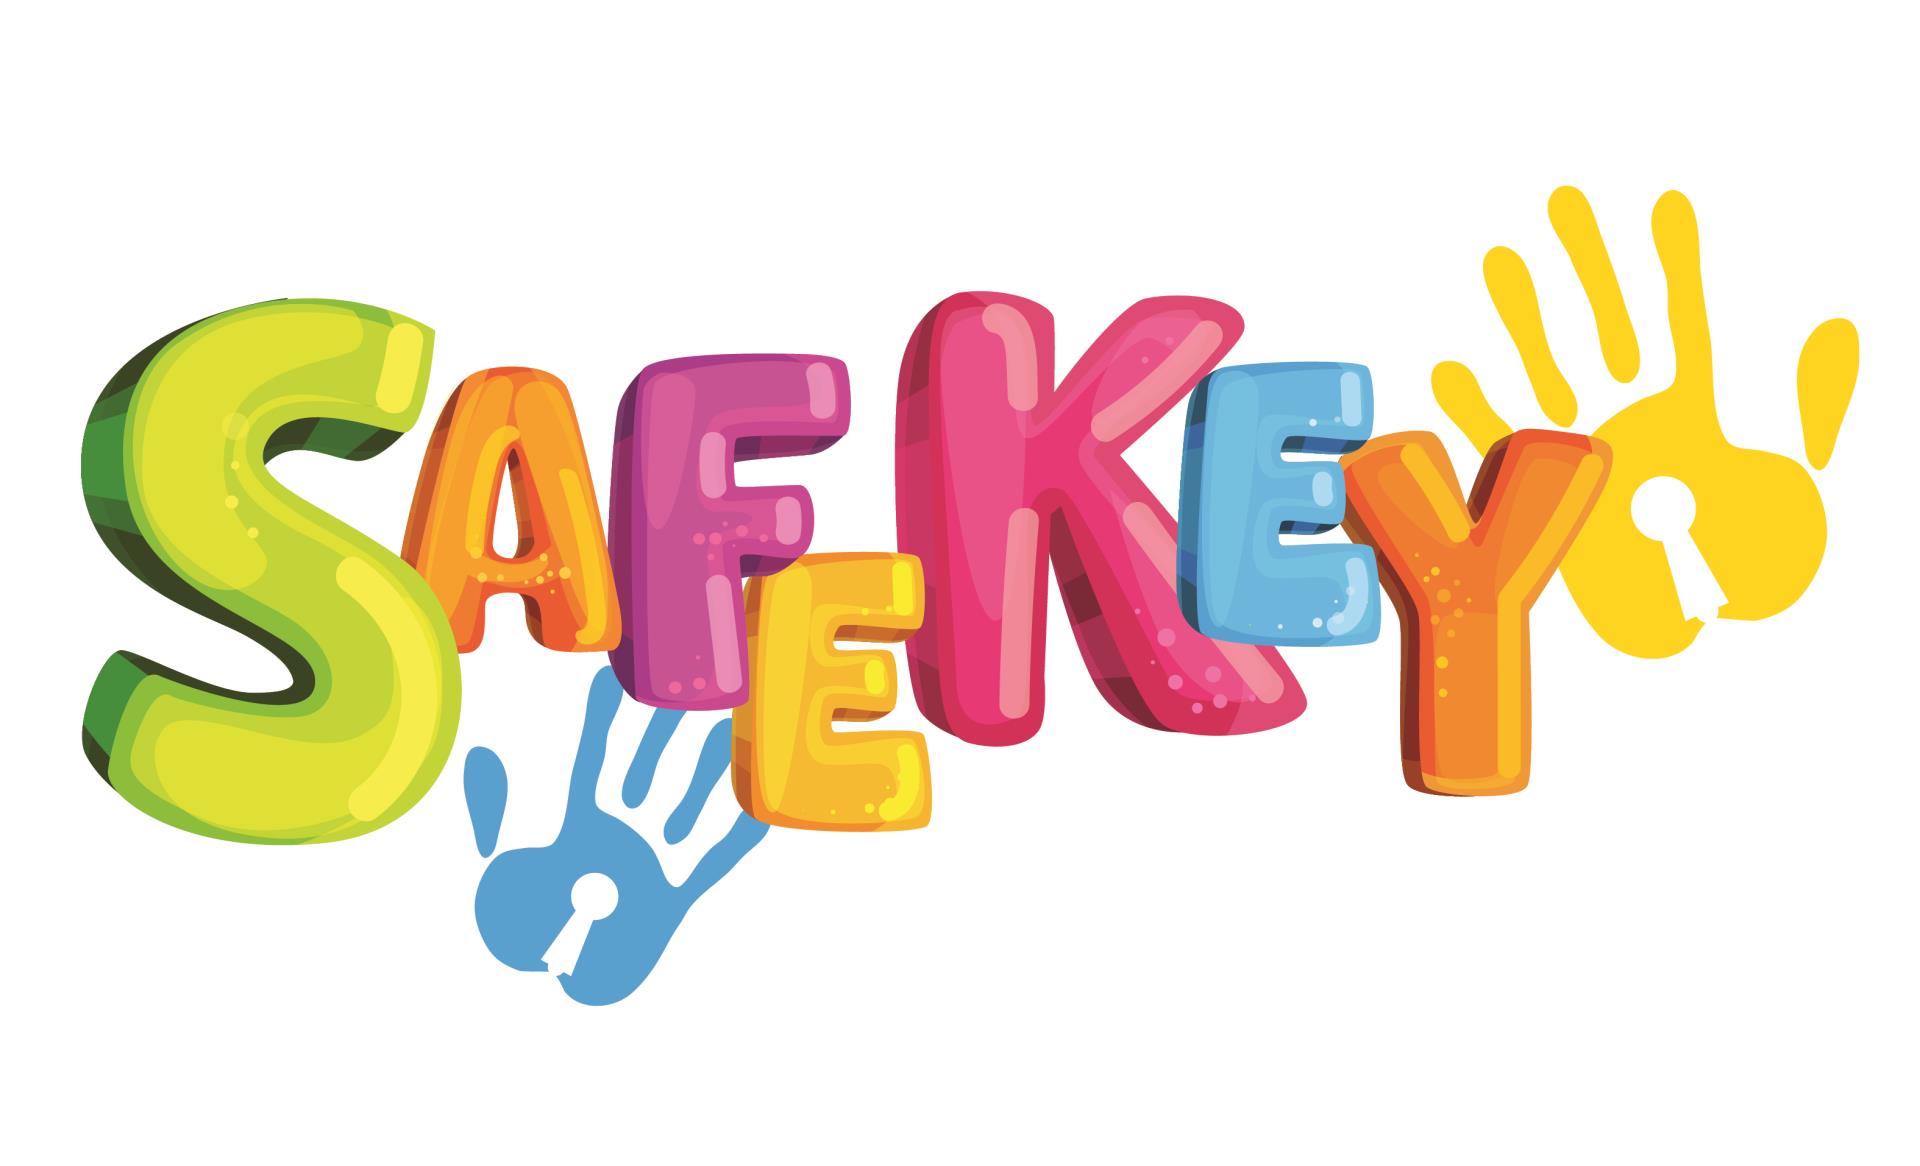 Safekey logo